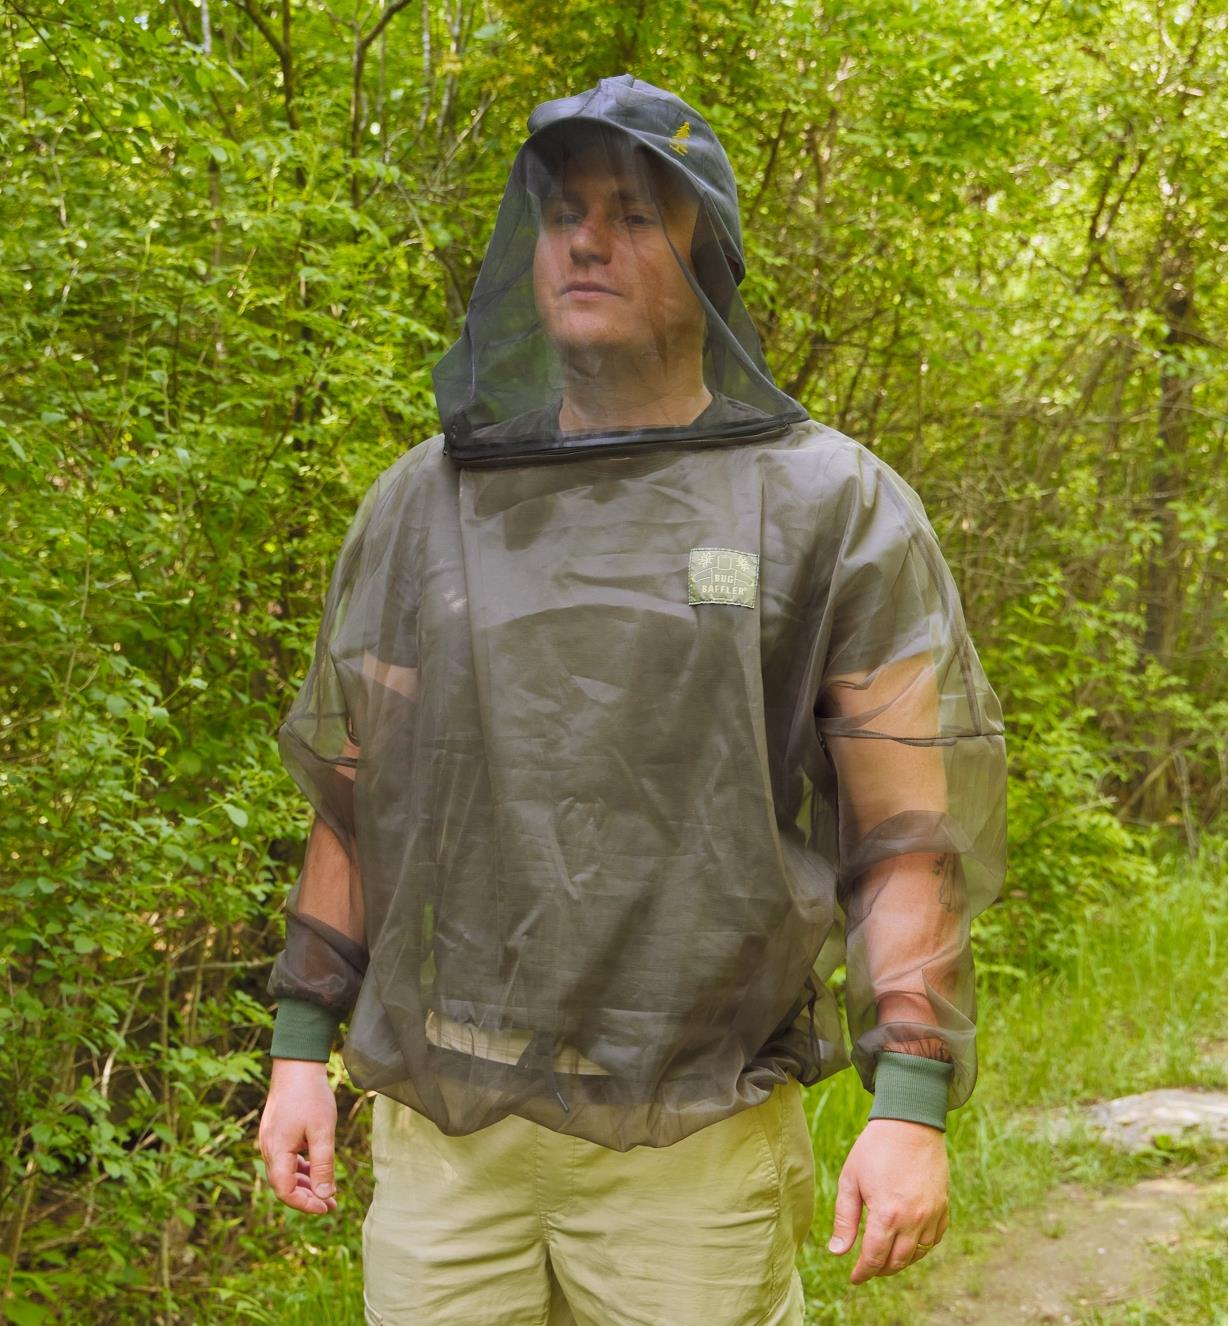 A man wears a bug-protection shirt on a hiking trail